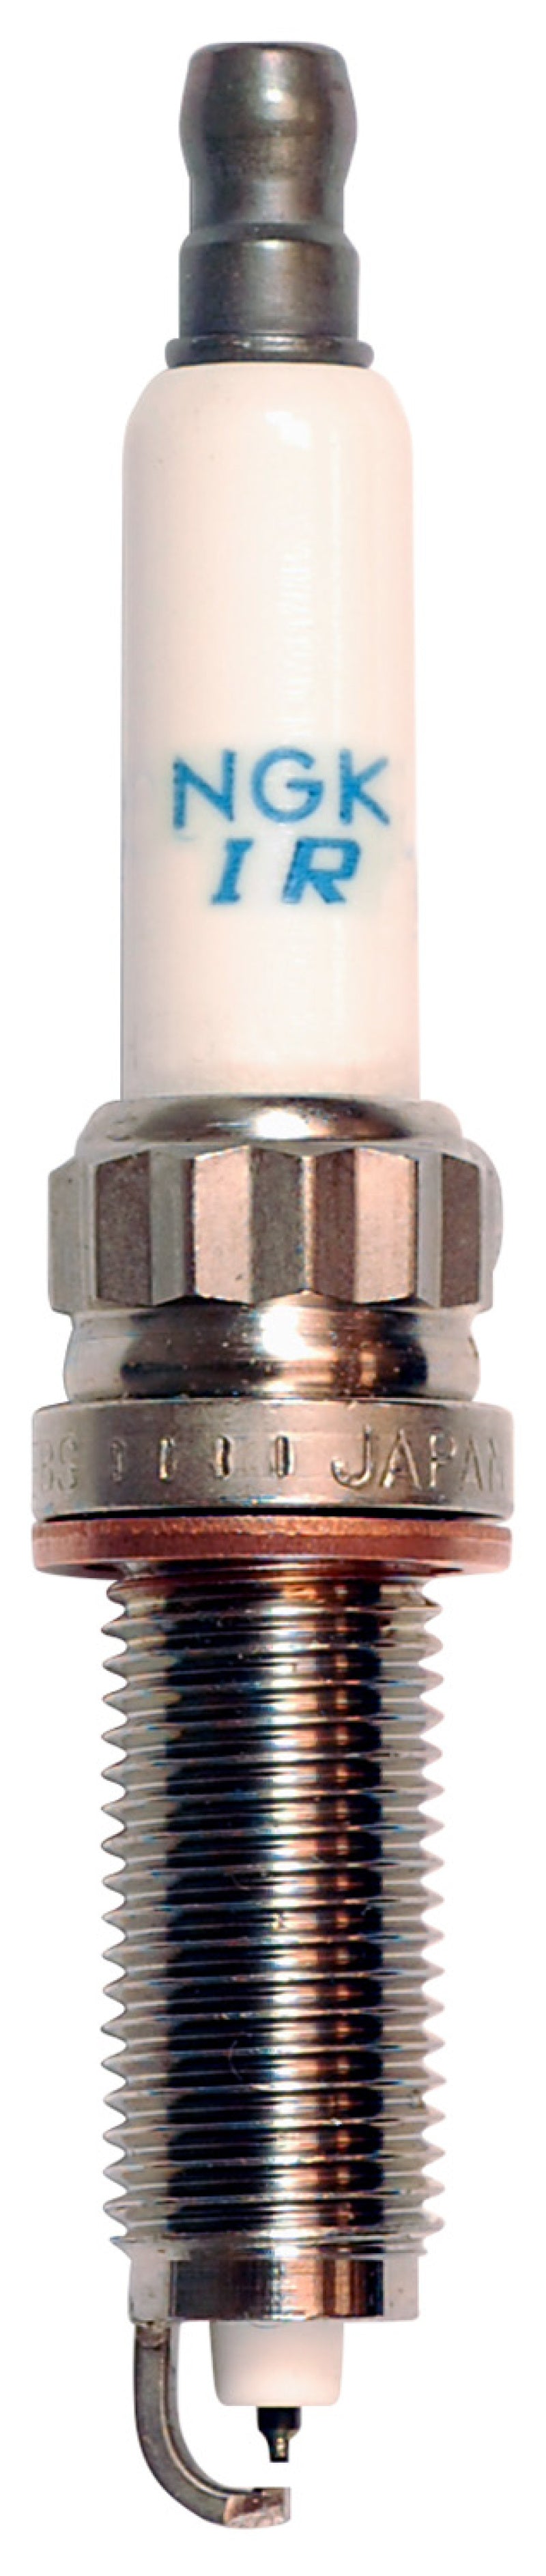 NGK Laser Iridium Spark Plug Box of 4 (SILZKBR8D8S).